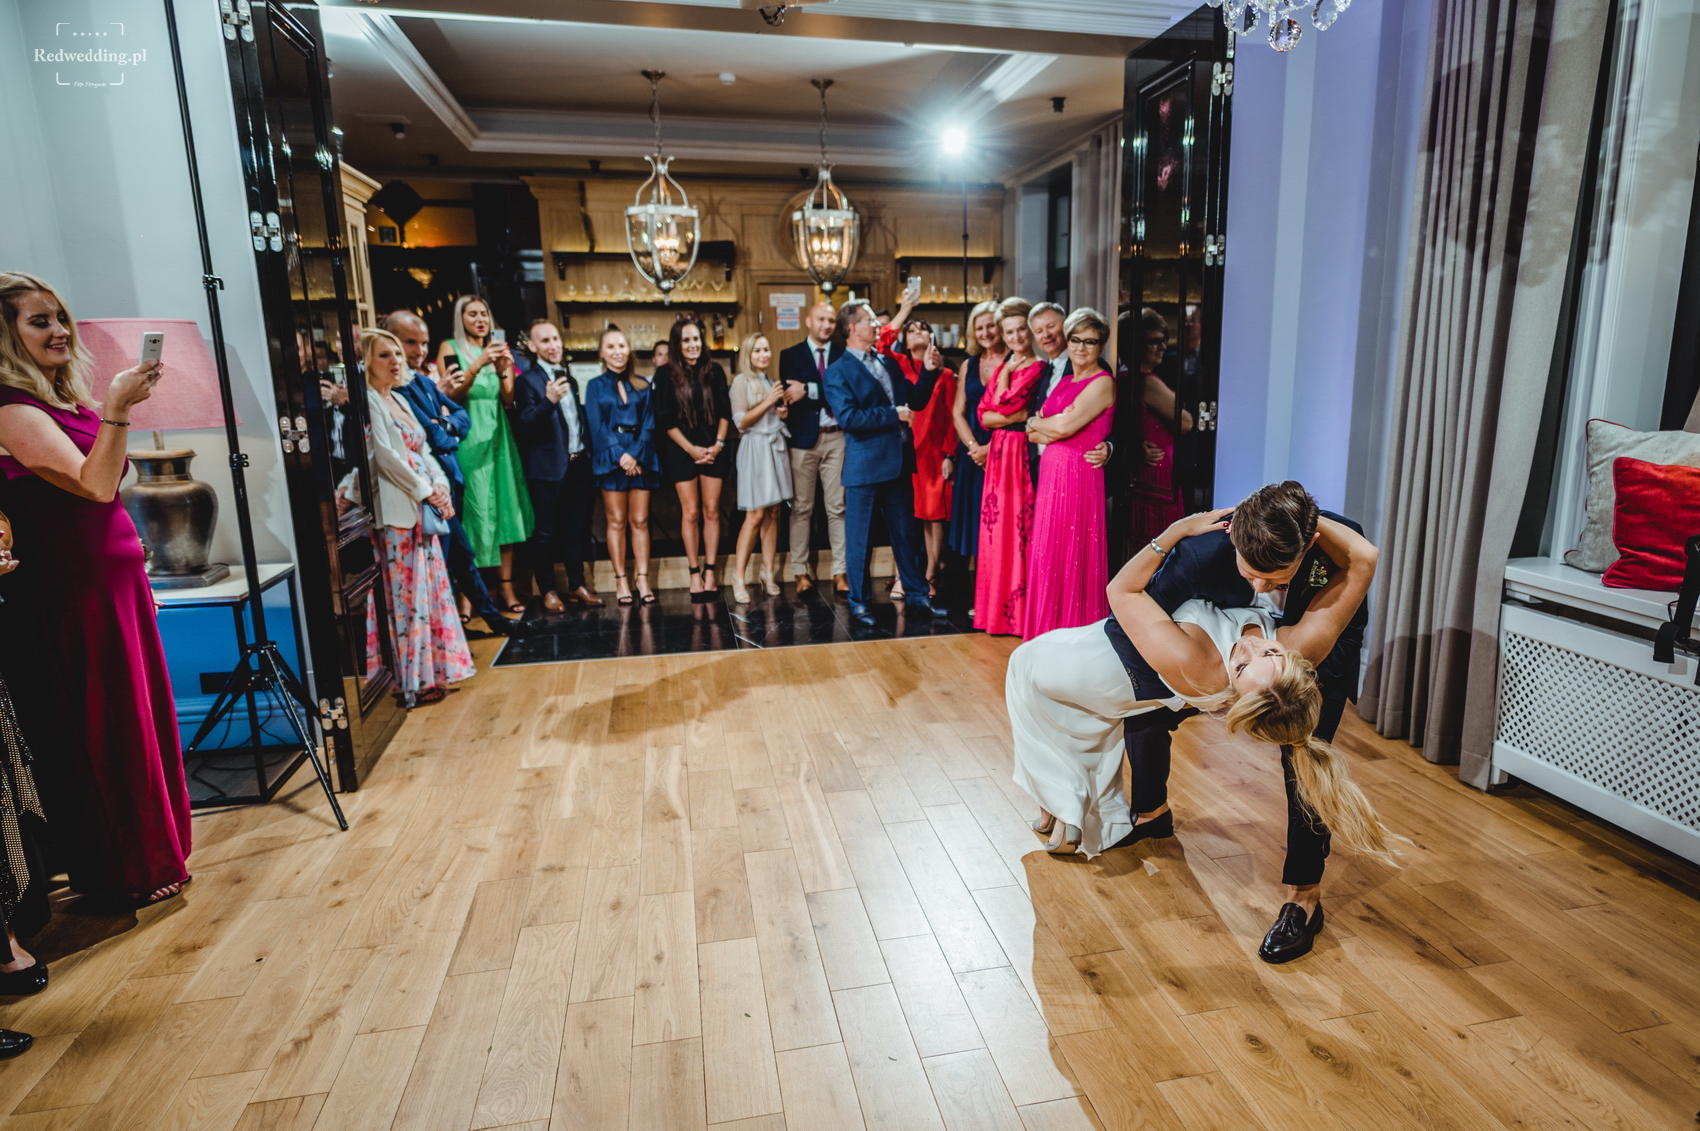 fotograf na wesele trójmiasto redwedding